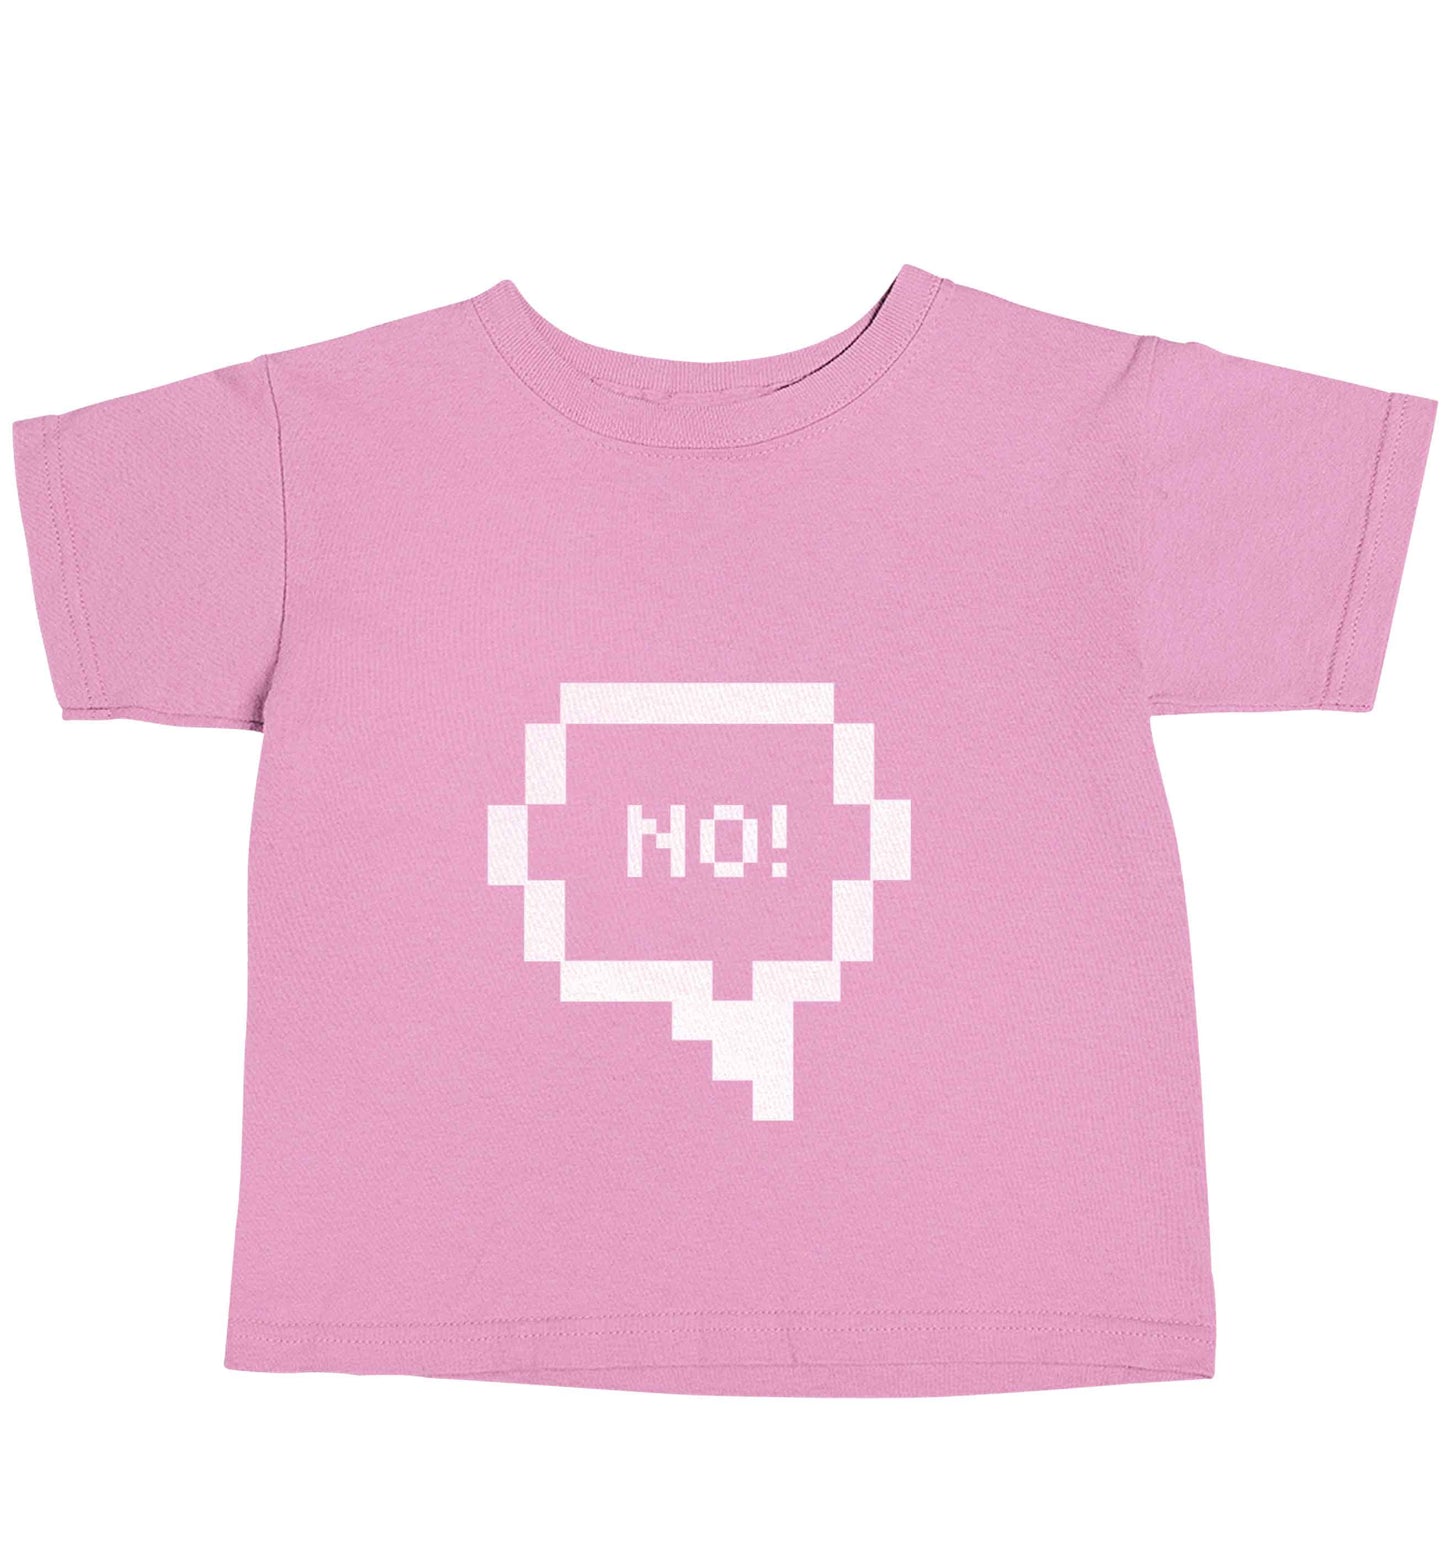 No light pink baby toddler Tshirt 2 Years